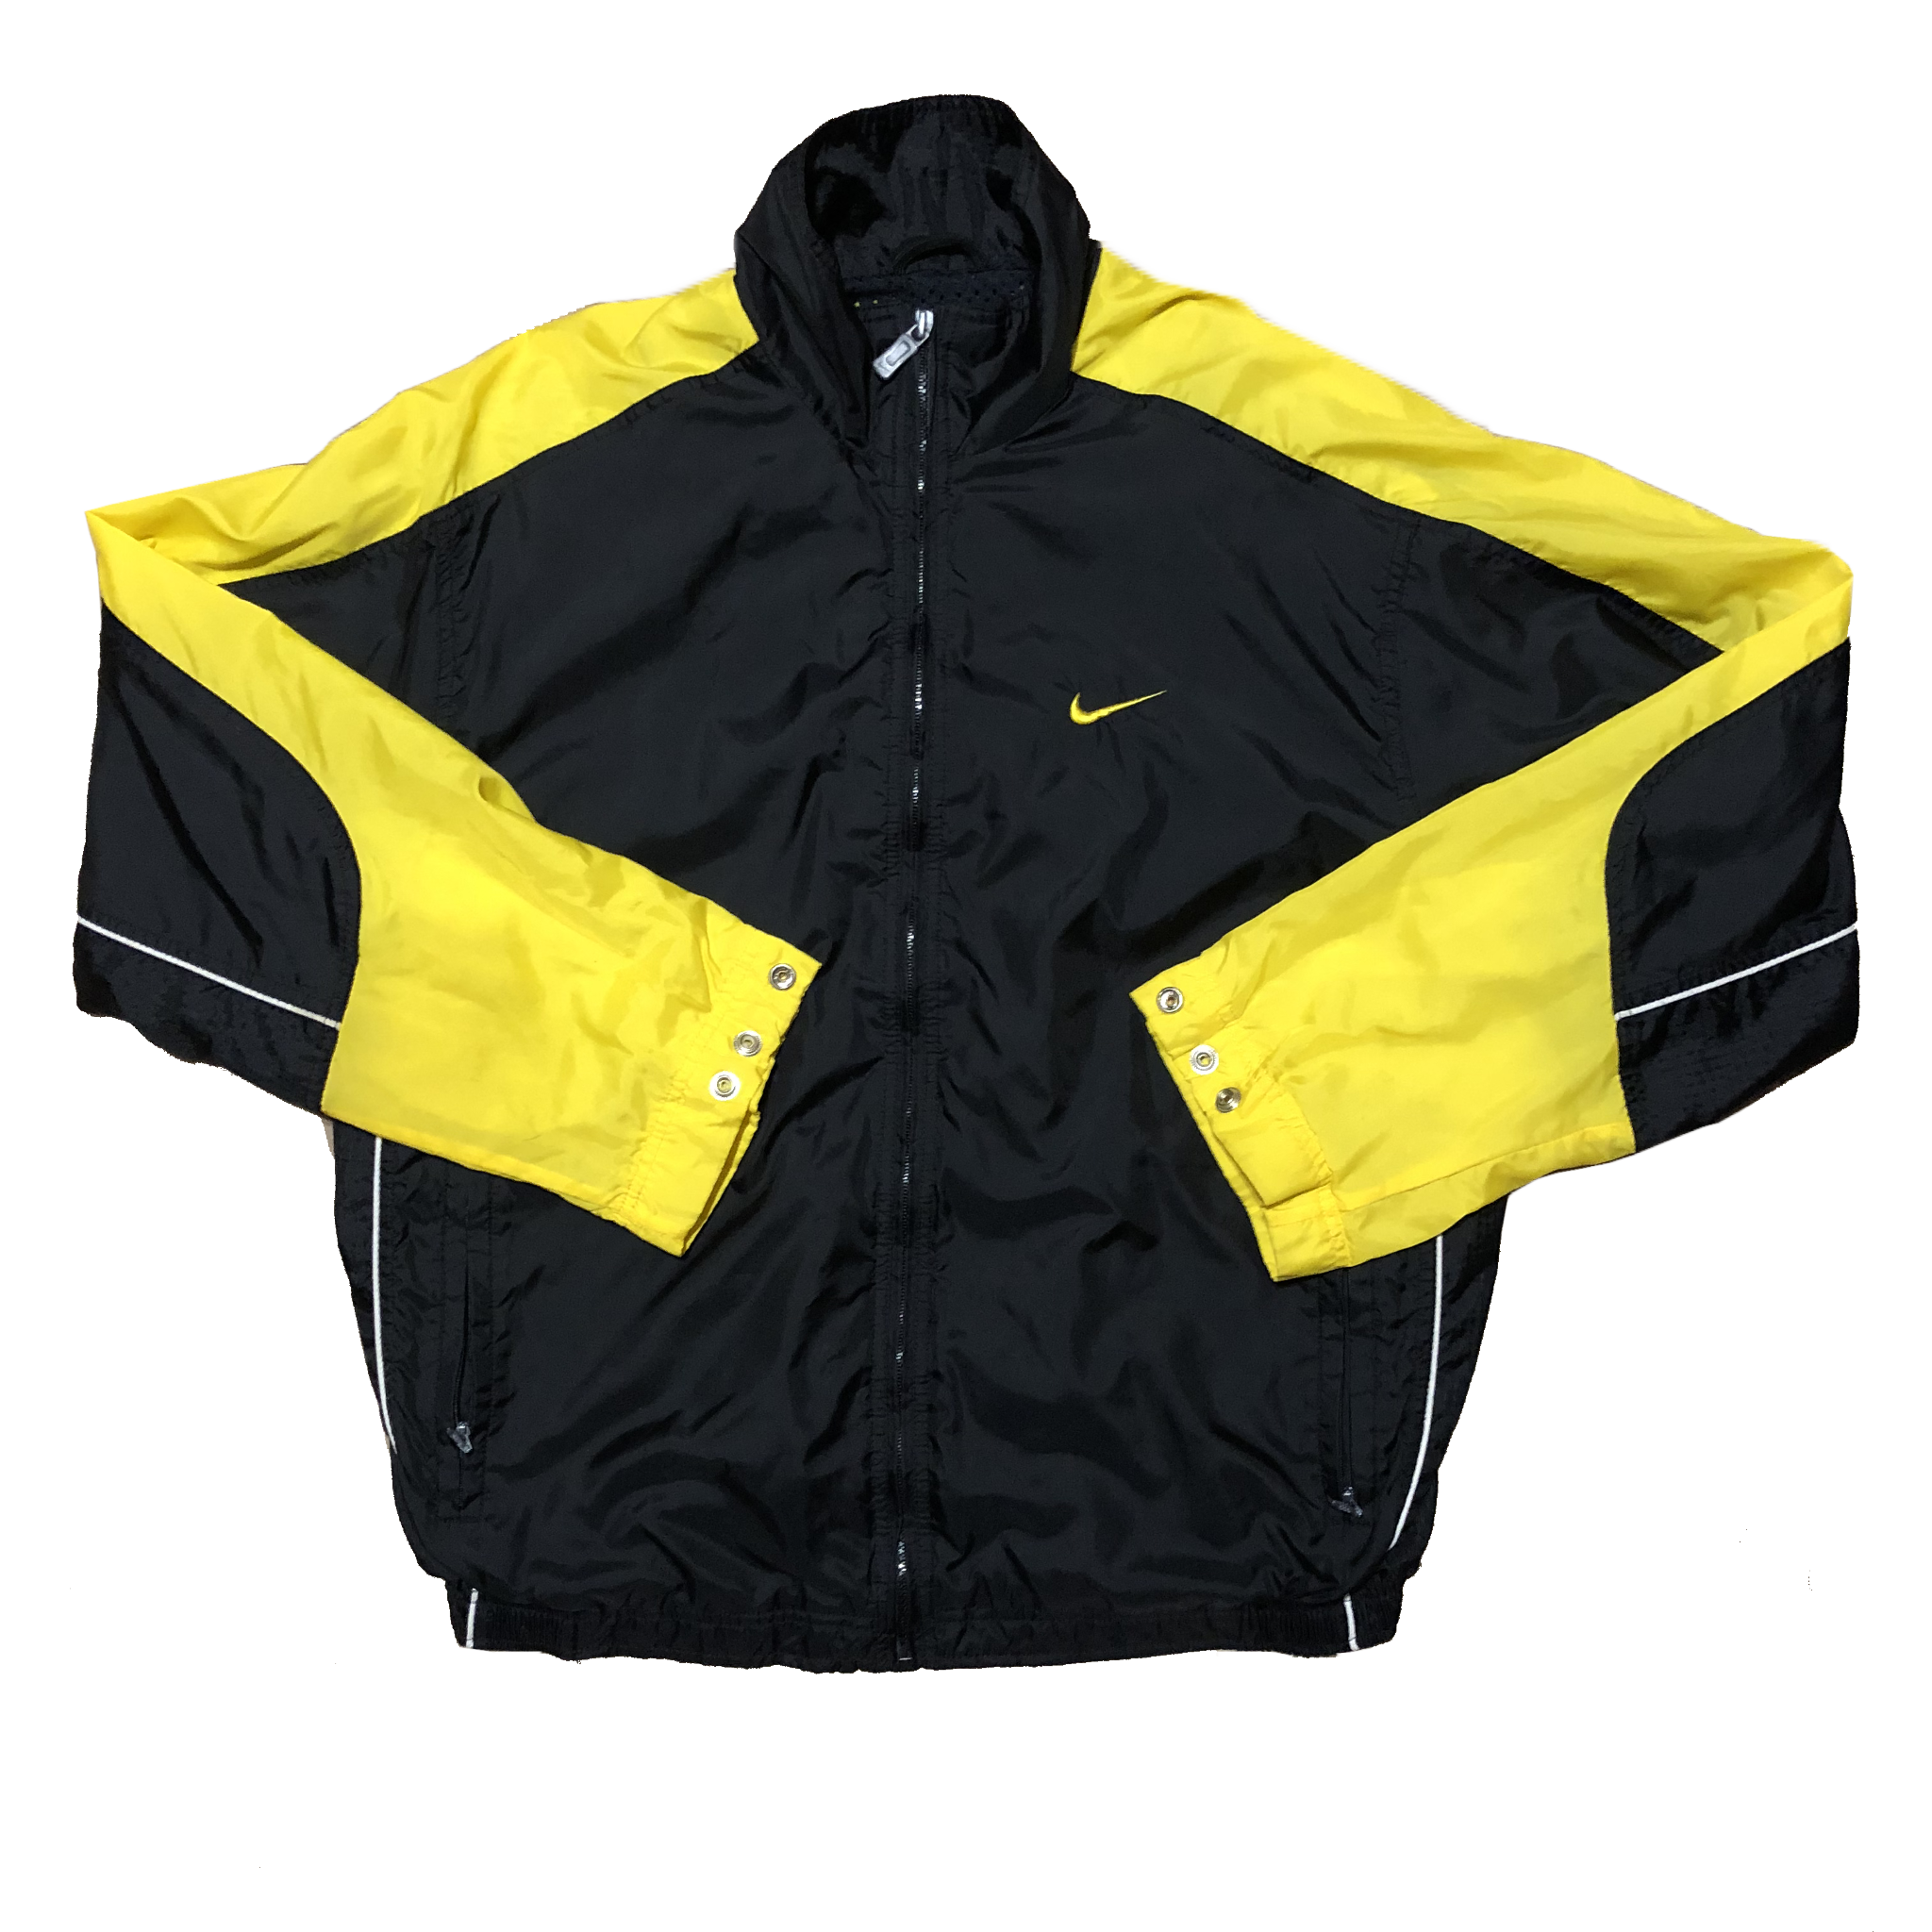 Vintage 90s Nike Windbreaker Jacket Black/Yellow Size Medium - Beyond 94